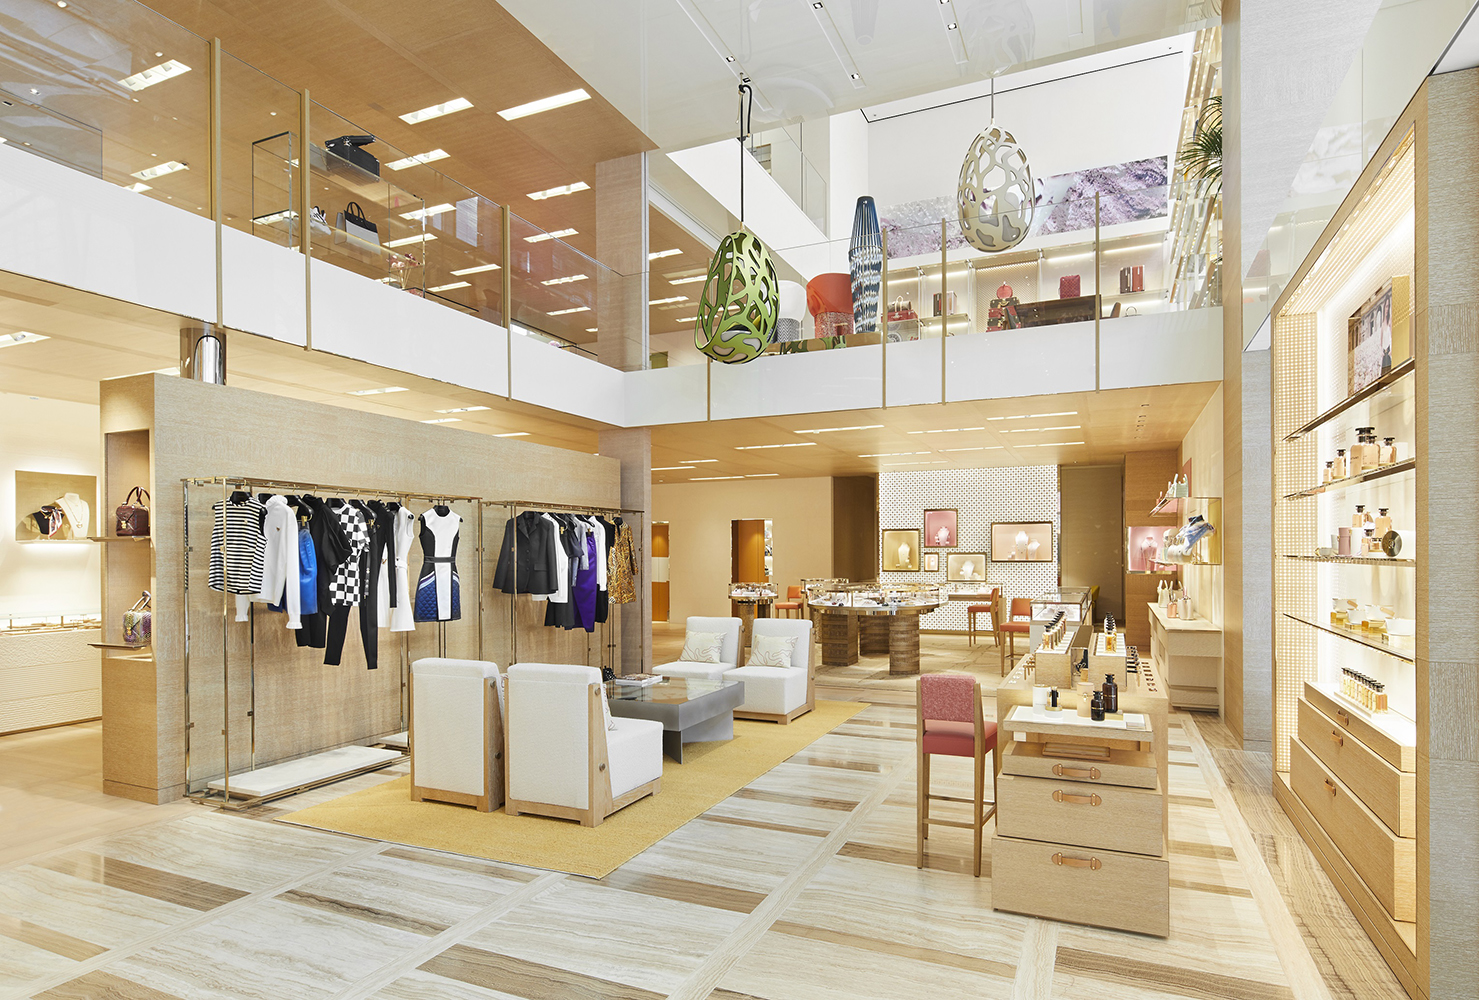 Louis Vuitton celebrates the opening of the Maison Osaka Midosuji